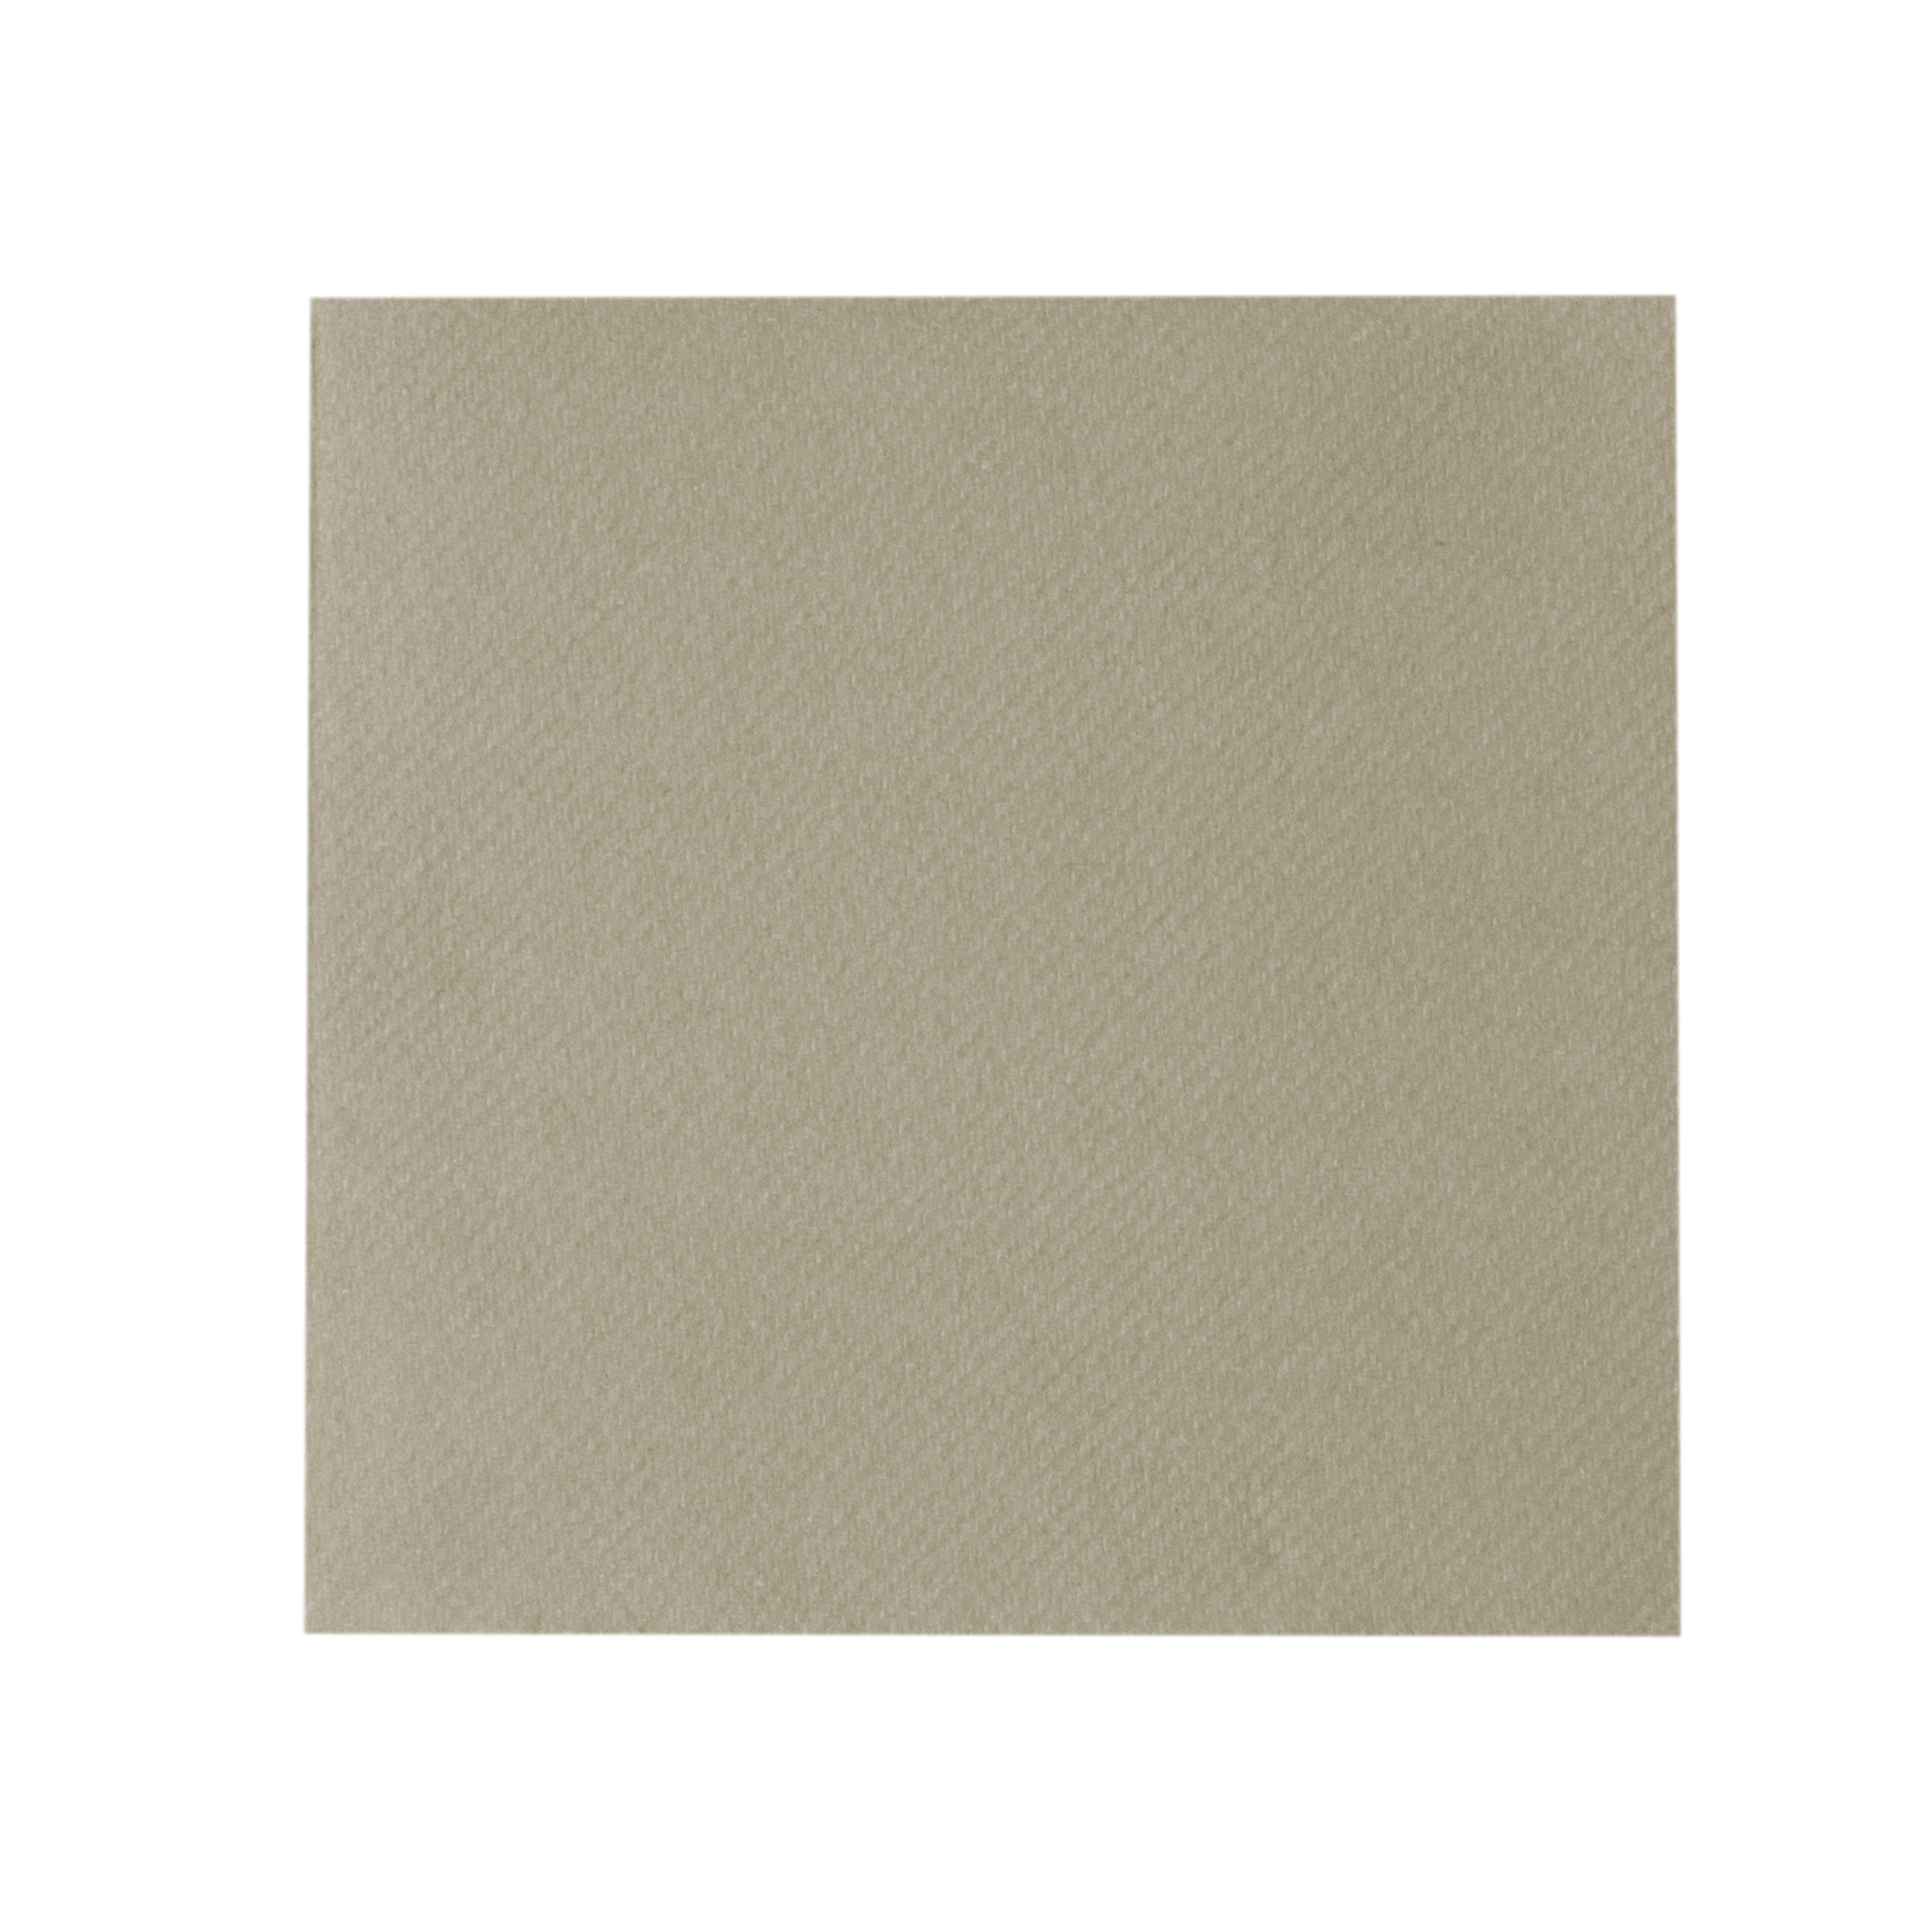 Mank Serviette Linclass-Light 1/4 Falz, 25 x 25 cm, Basic beige-grau